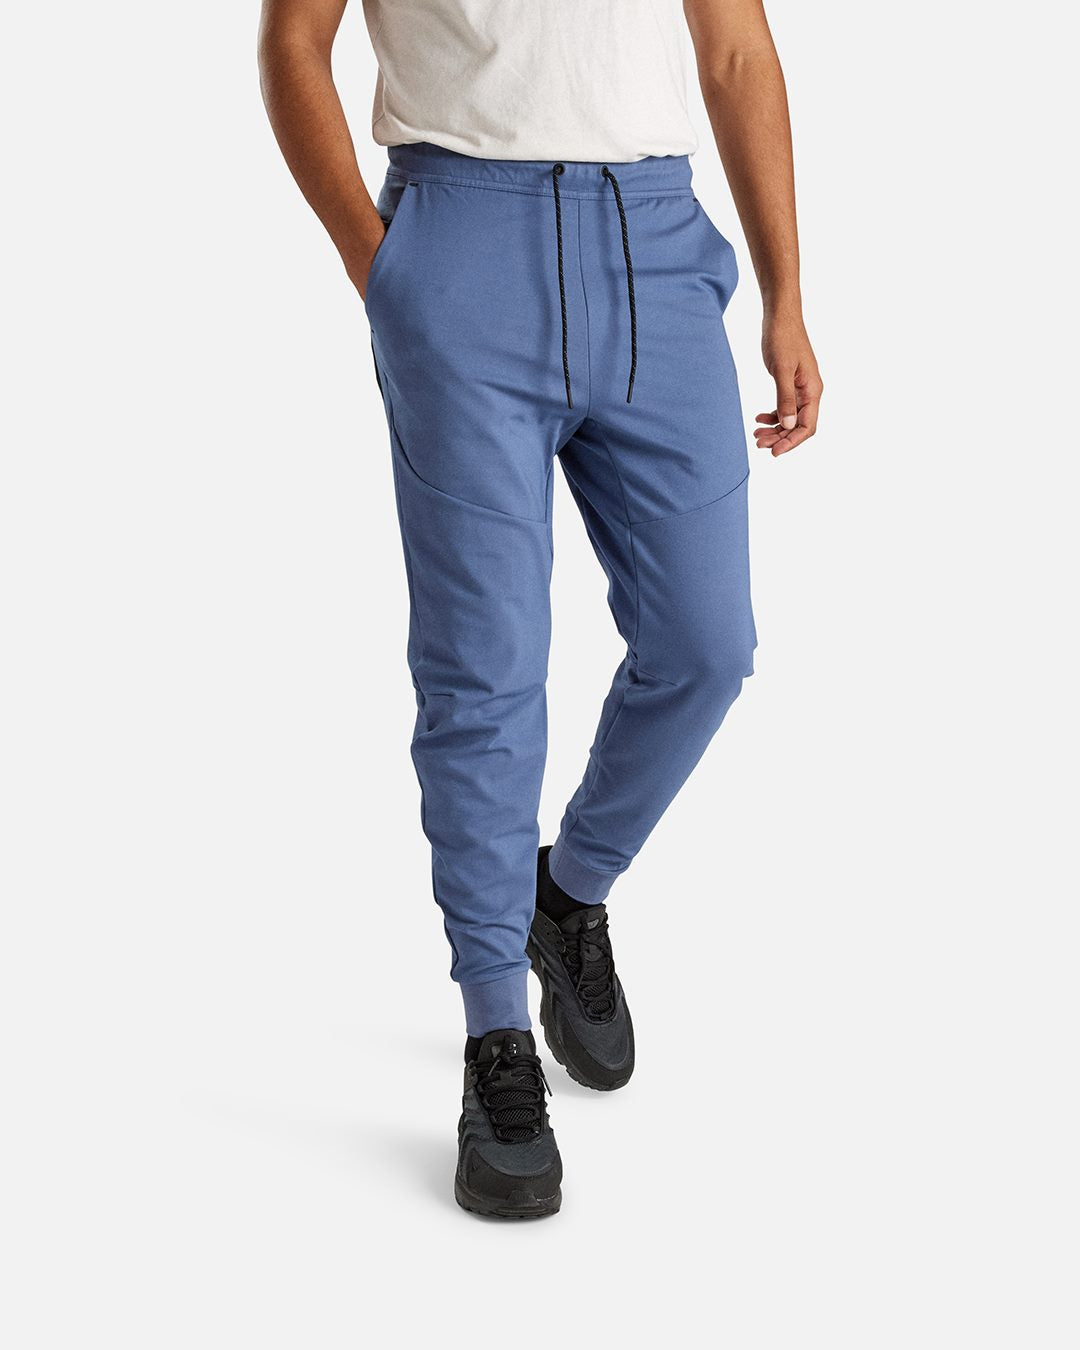 Pantalon Nike Tech Fleece Lightweight – Blau/Schwarz